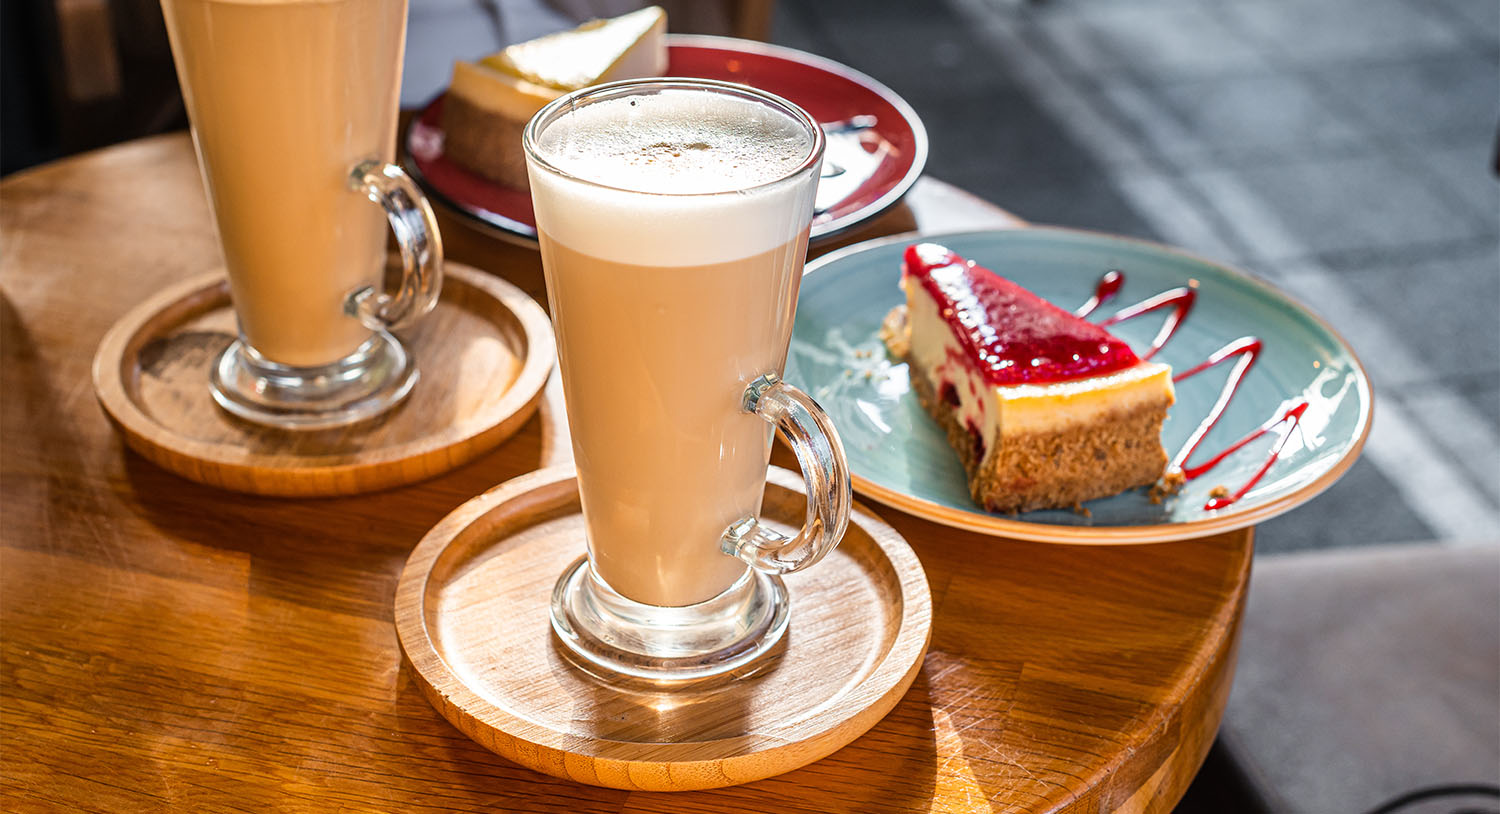 caffe-latte-flat-white-kawa-z-ekspresu-kawa-biała-kawa-z-mlekiem-kawiarnia-ciasta